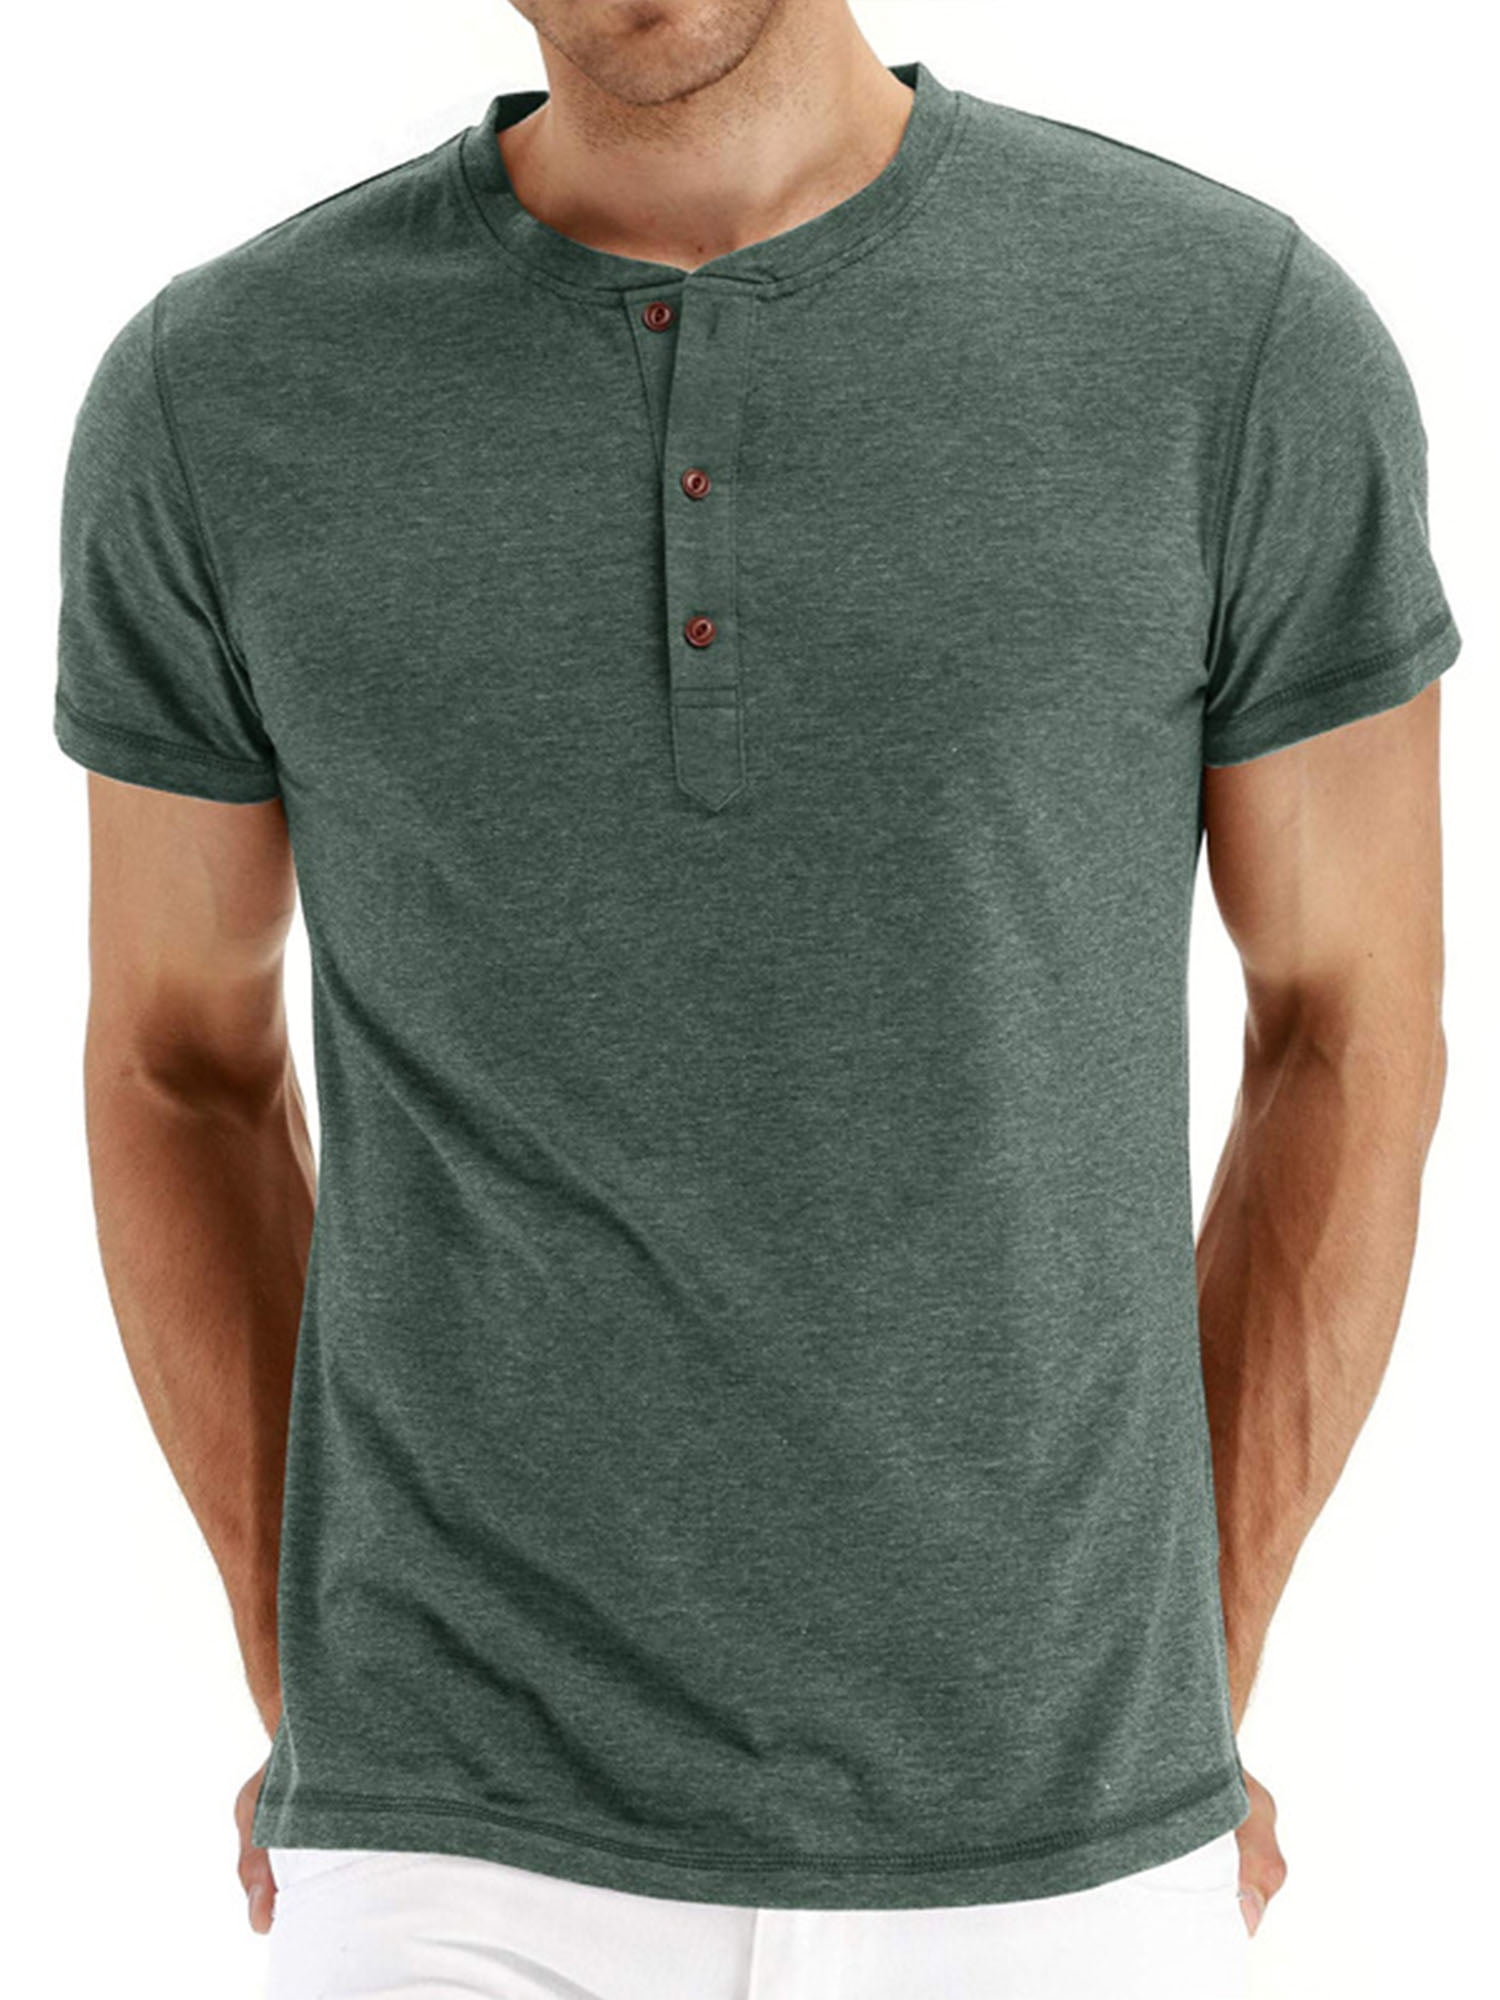 Men's Shirts Buttons Sleeve Tops Slim Fit T-Shirts Men Casual Tee Blouse - Walmart.com